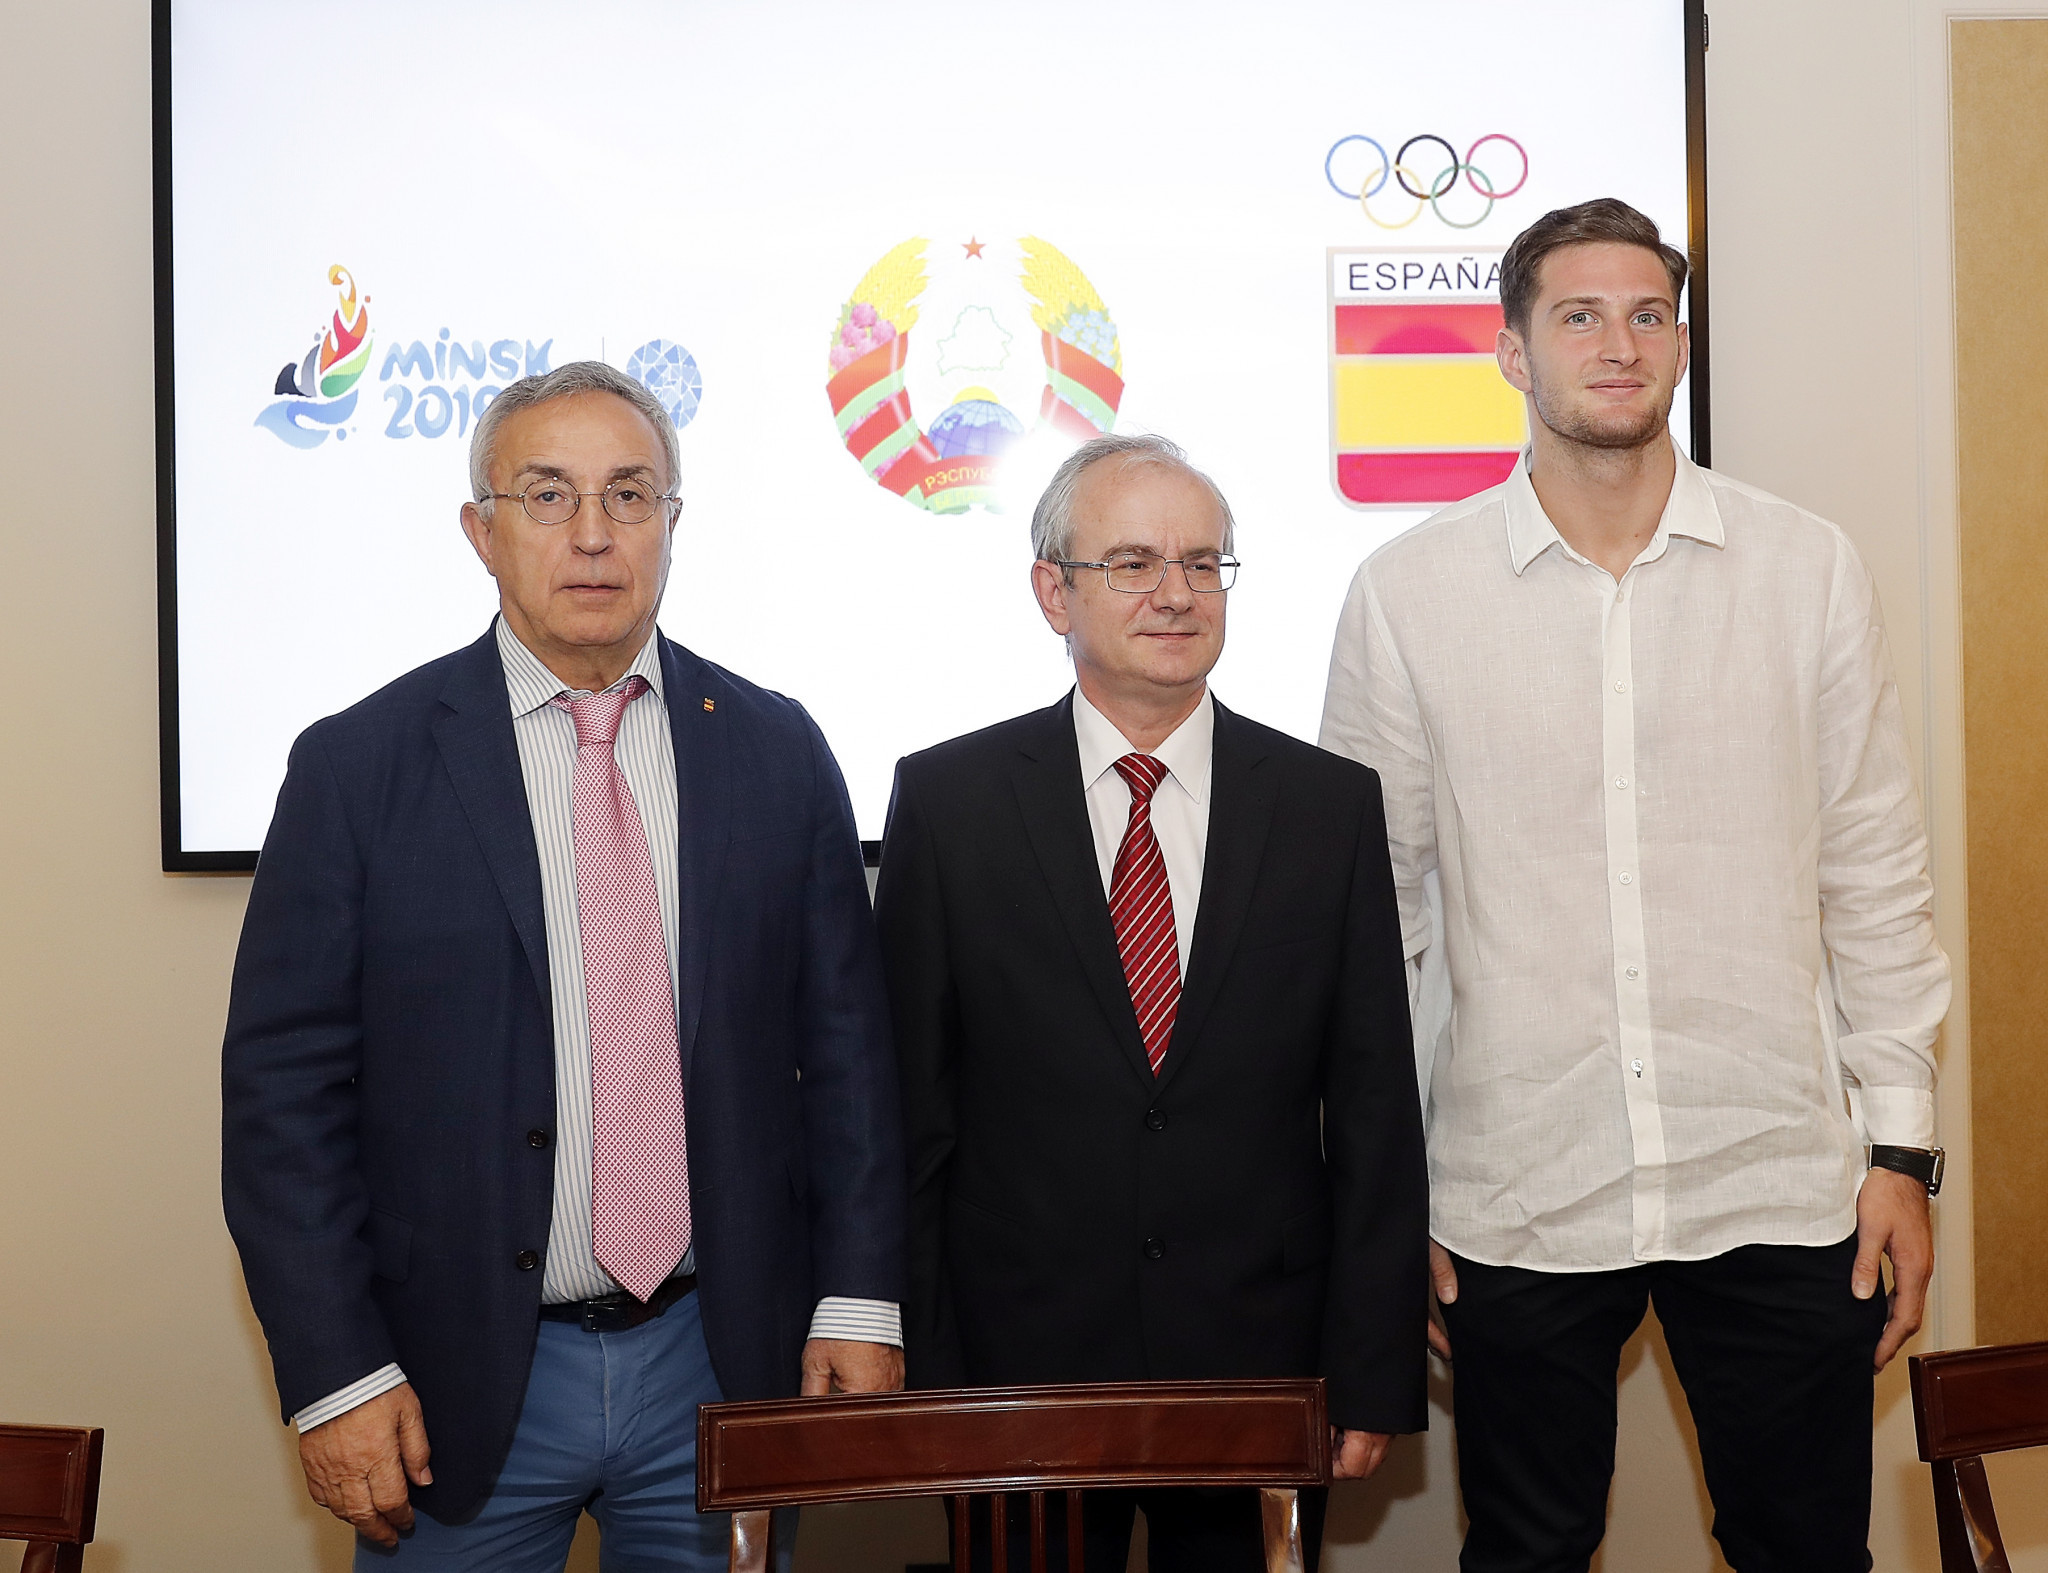 Judo world champion Nikoloz Sherazadishvili was present at a Minsk 2019 press conference in Spain alongside Spanish Olympic Committee President Alejandro Blanco and Ambassador of Belarus in Spain, Pavel Pustovoy ©EOC